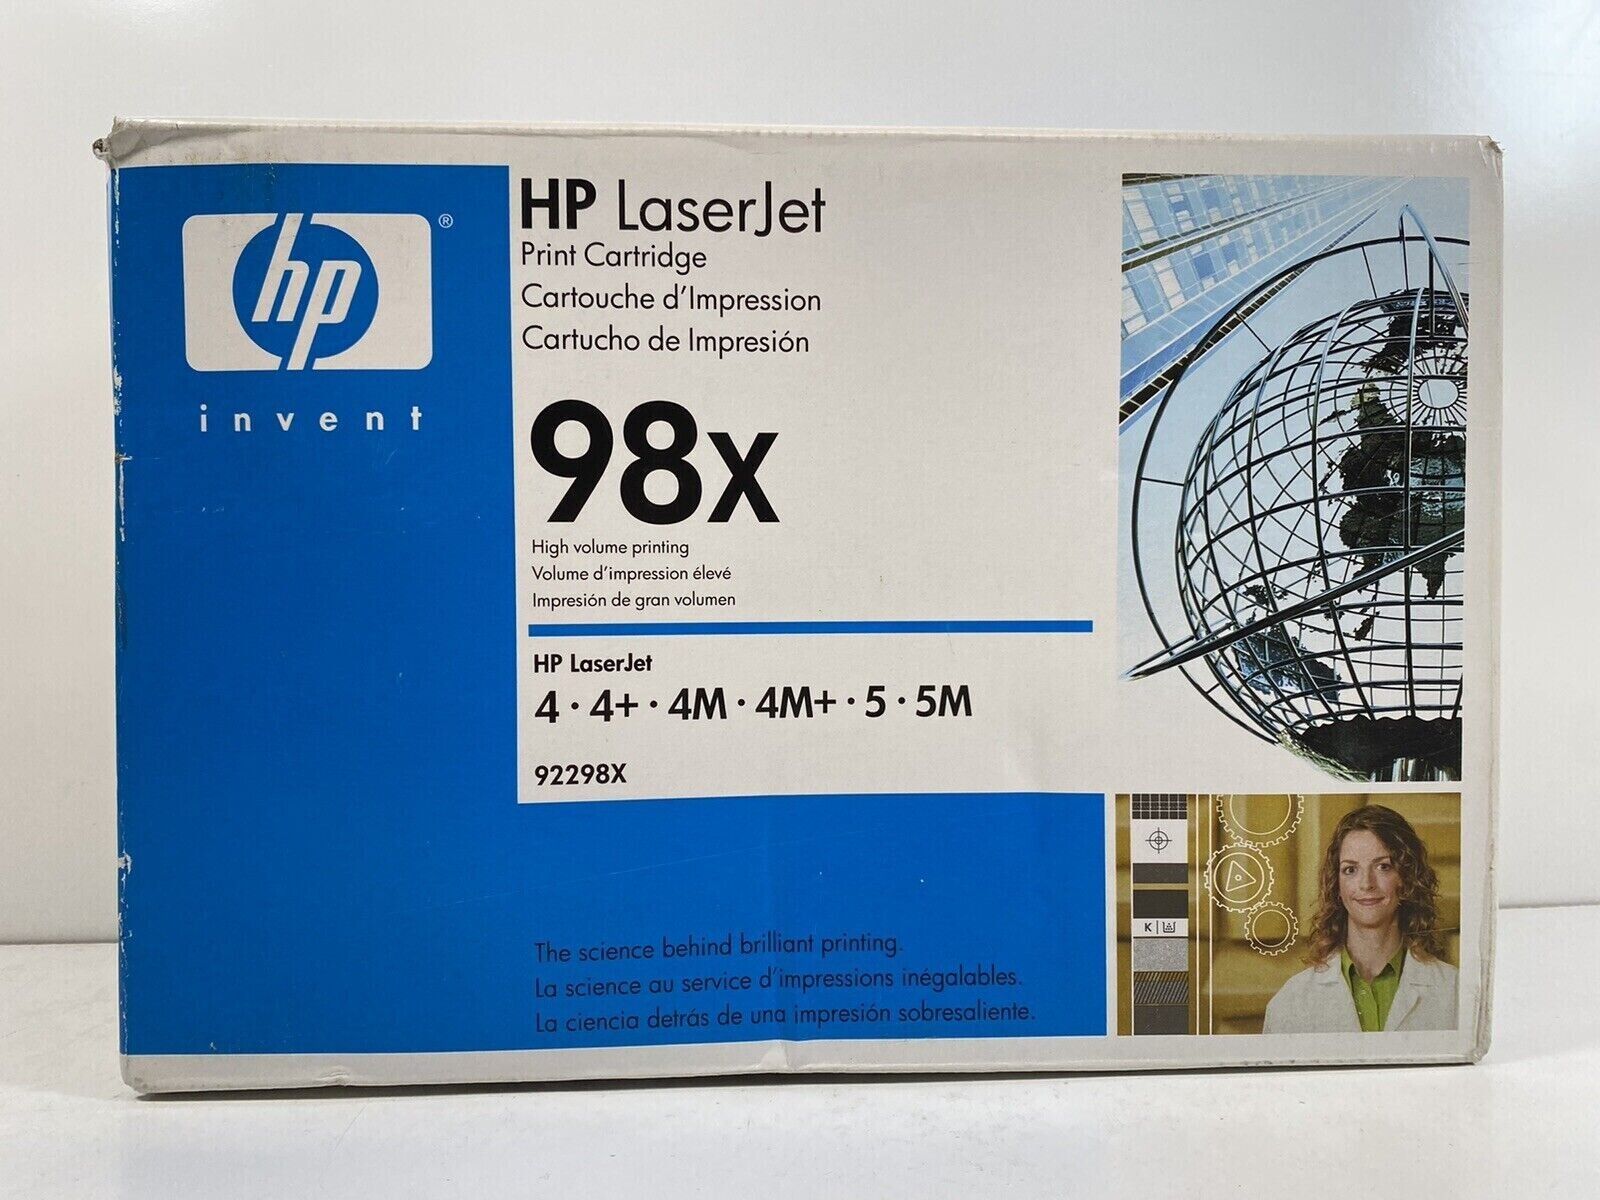 HP 98x  Laserjet Print Cartridge 92298X NEW Unused / SEALED In Box